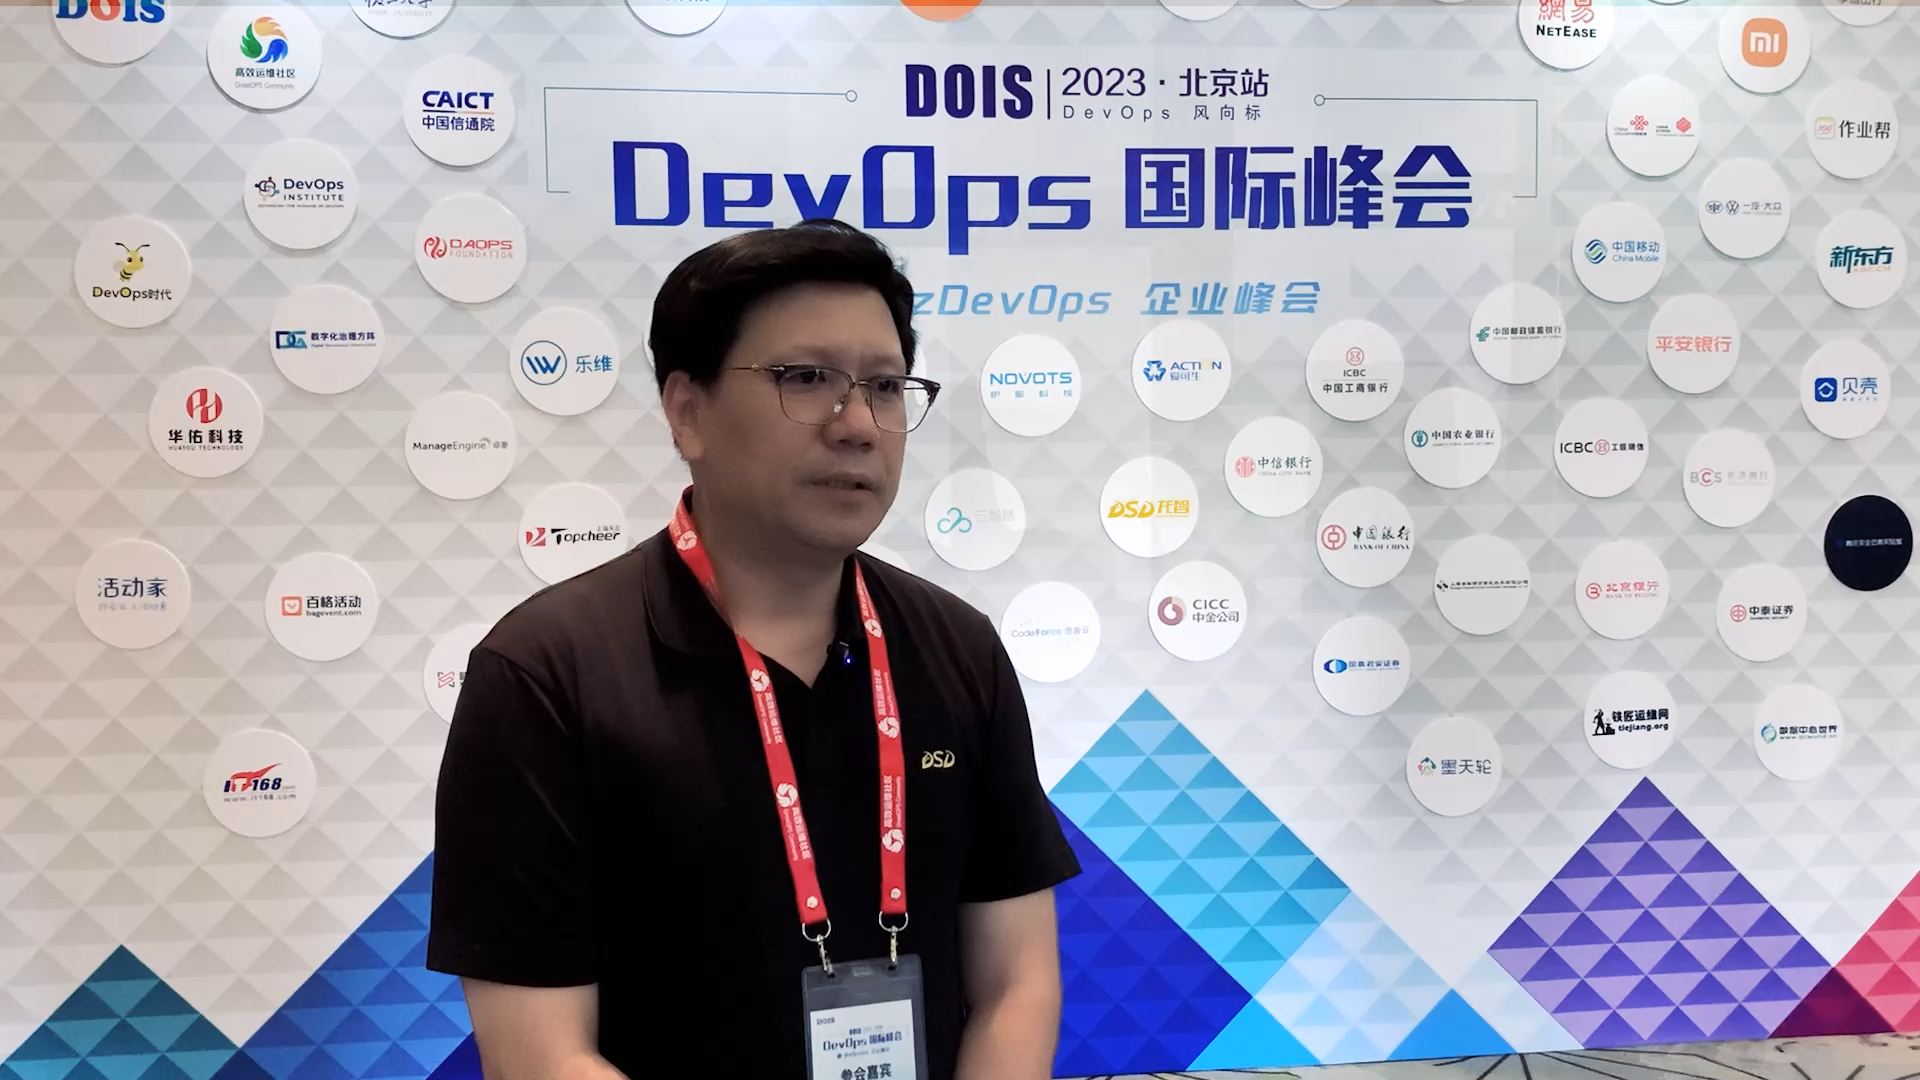 DevOps国际峰会 | 采访龙智总经理，分享DevOps见解与行业趋势